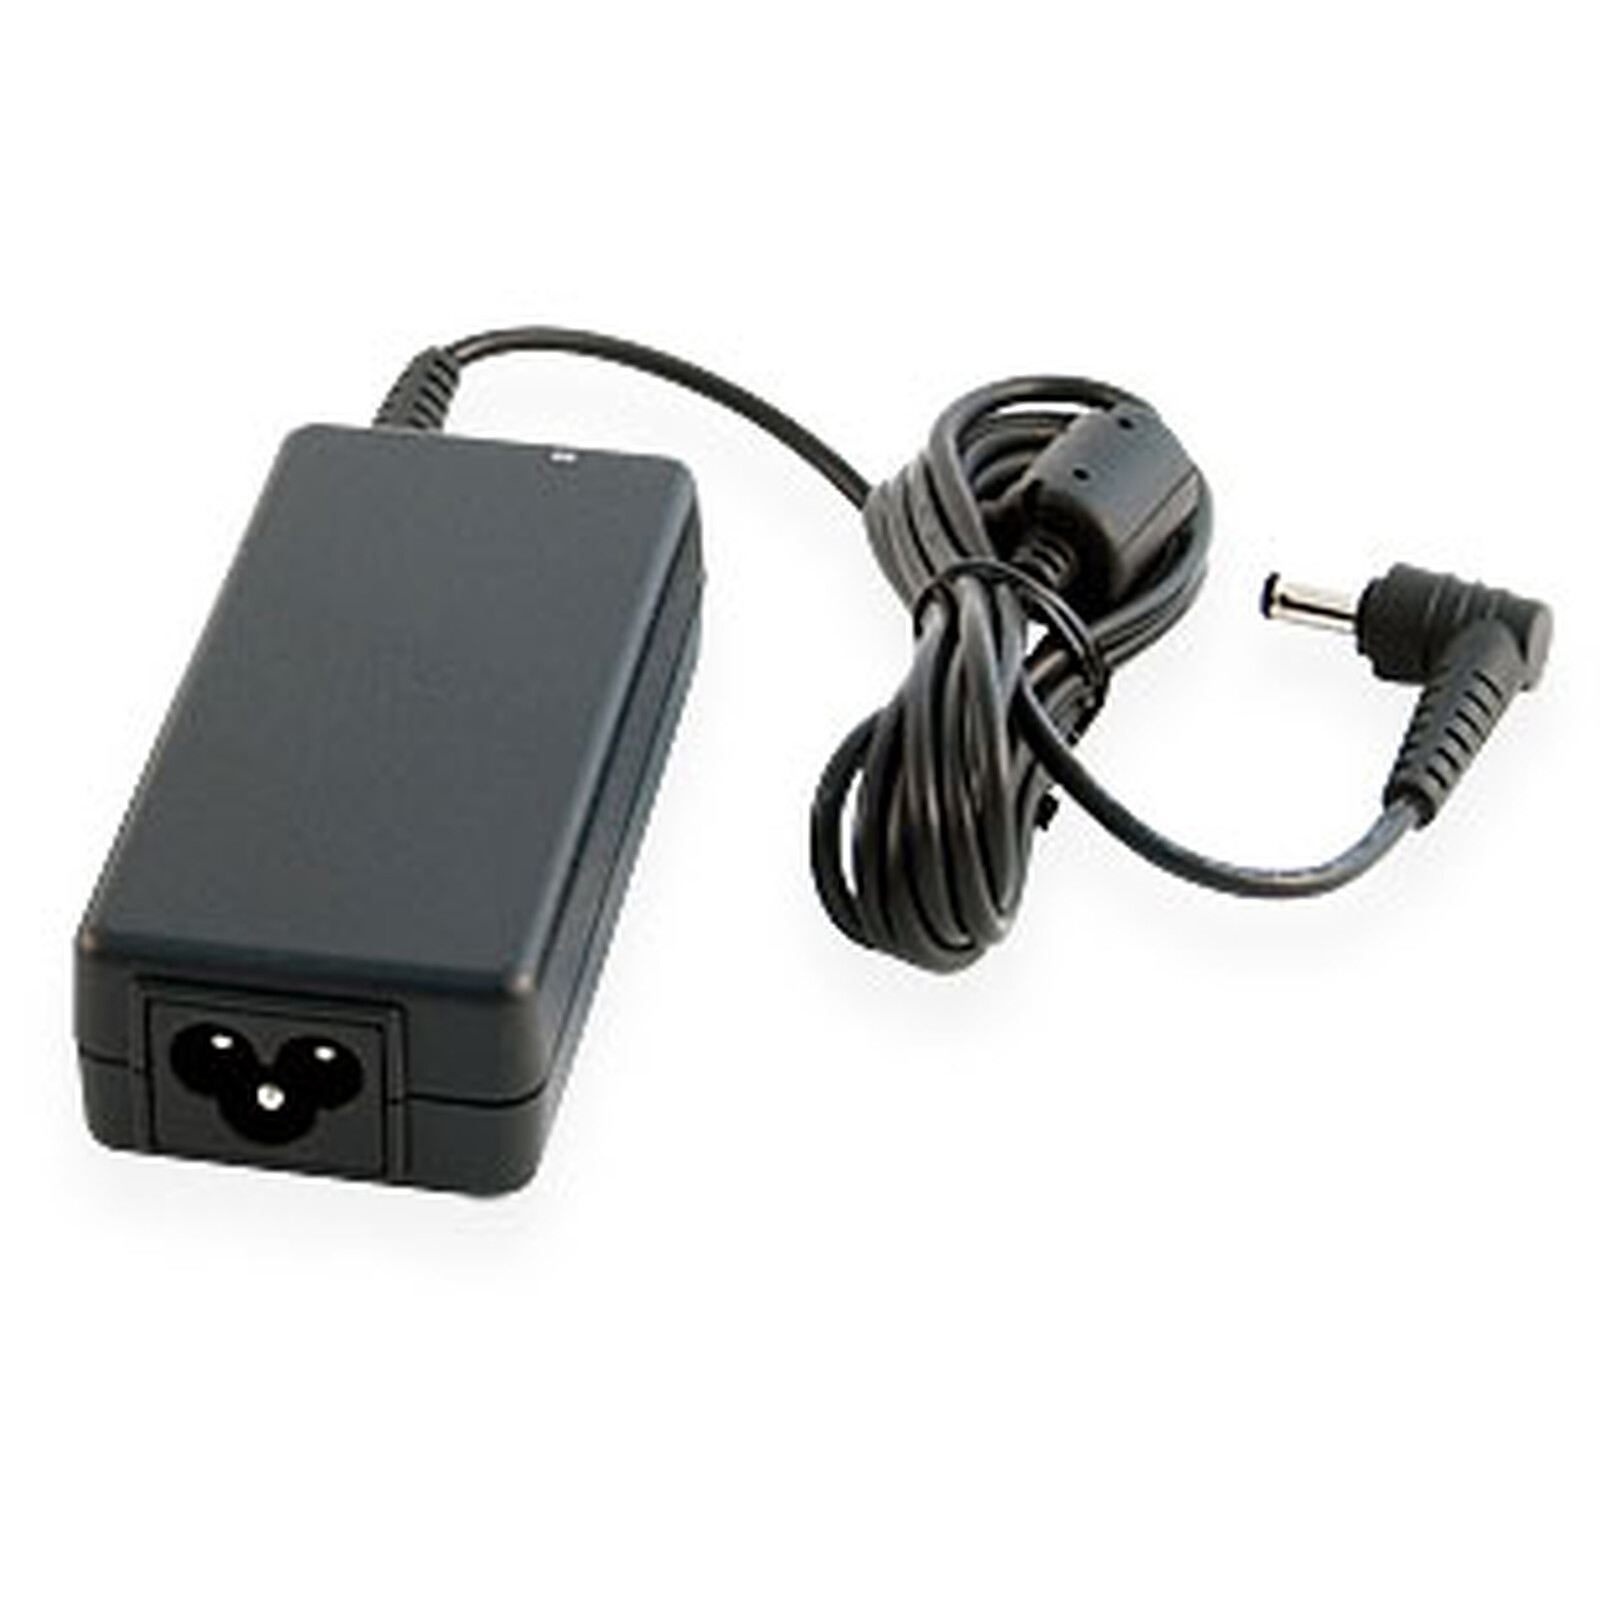 HP Slim Travel Power Adapter USB-C 65W (3PN48AA) - Chargeur PC portable -  Garantie 3 ans LDLC